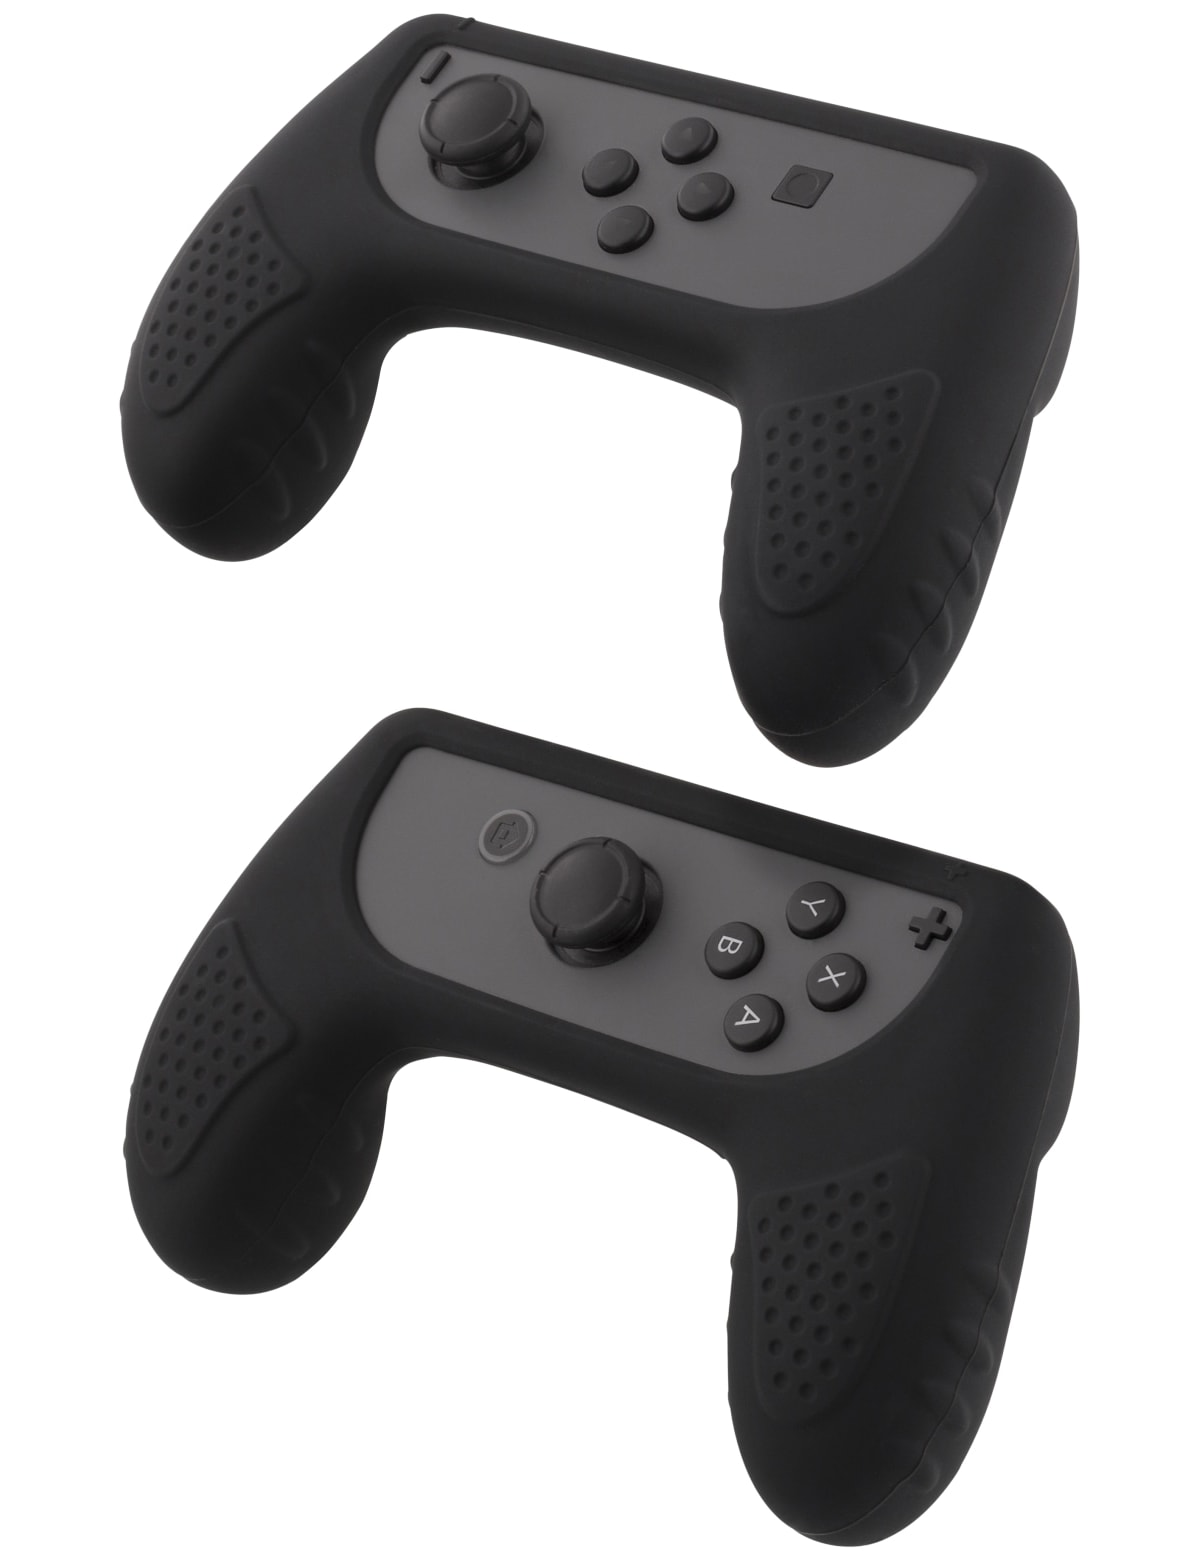 DELTACO GAMING Joy-Con Silikongriffe für Nintendo Switch, schwarz